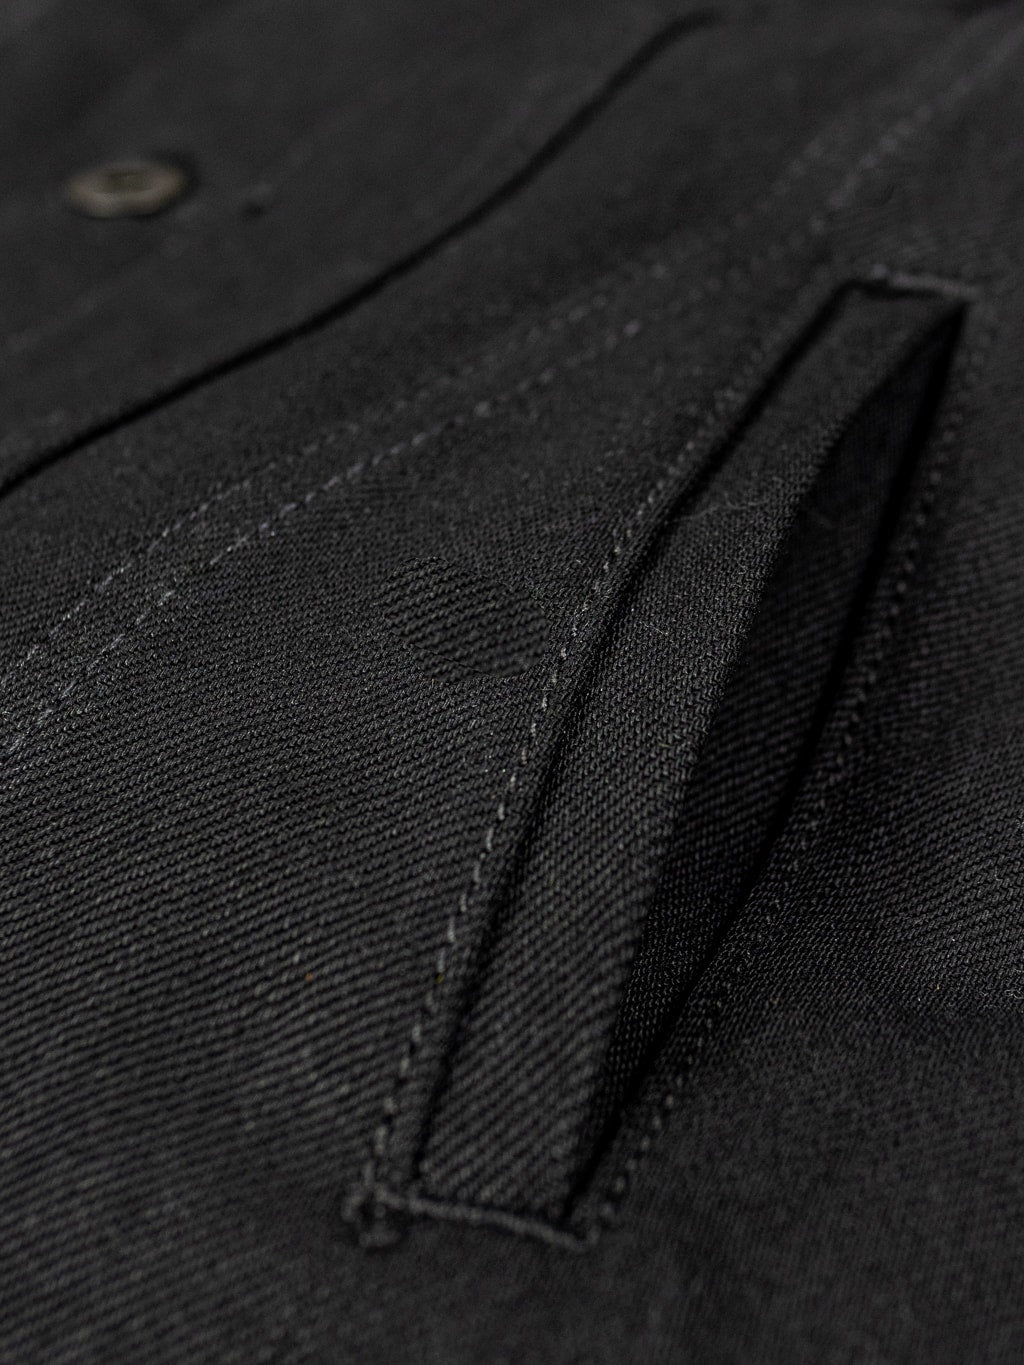 3sixteen type III denim jacket double black side pocket detail